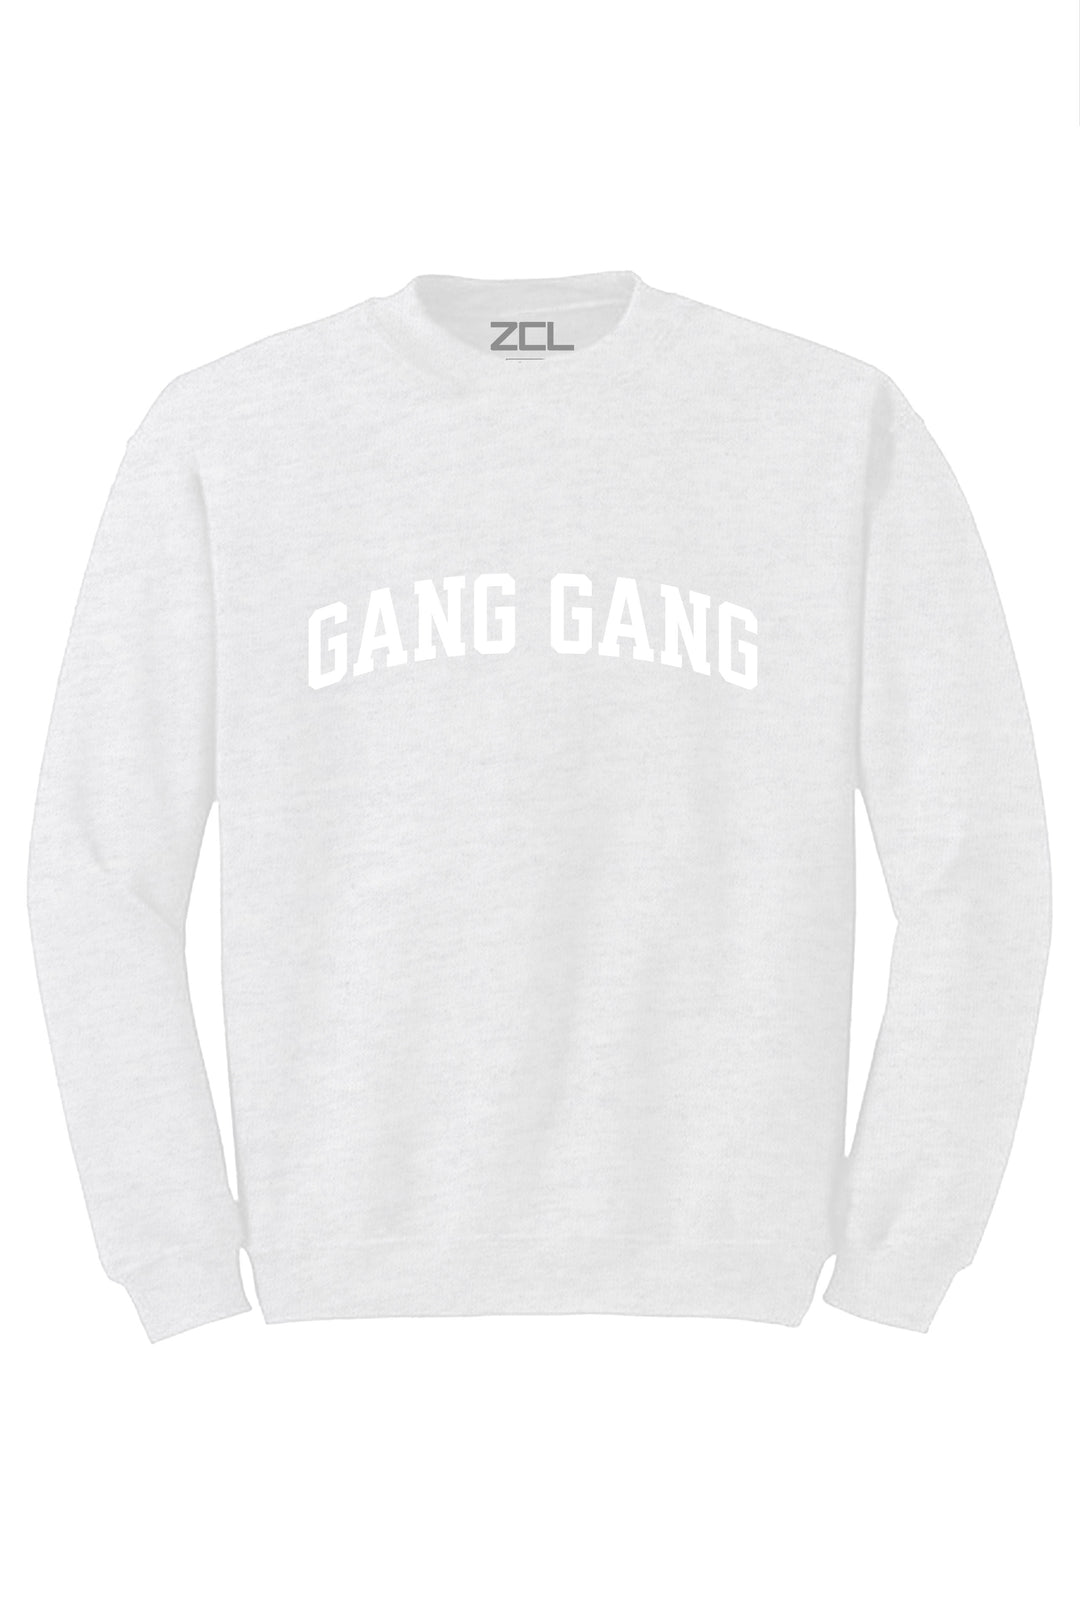 Gang Gang Crewneck Sweatshirt (White Logo) - Zamage